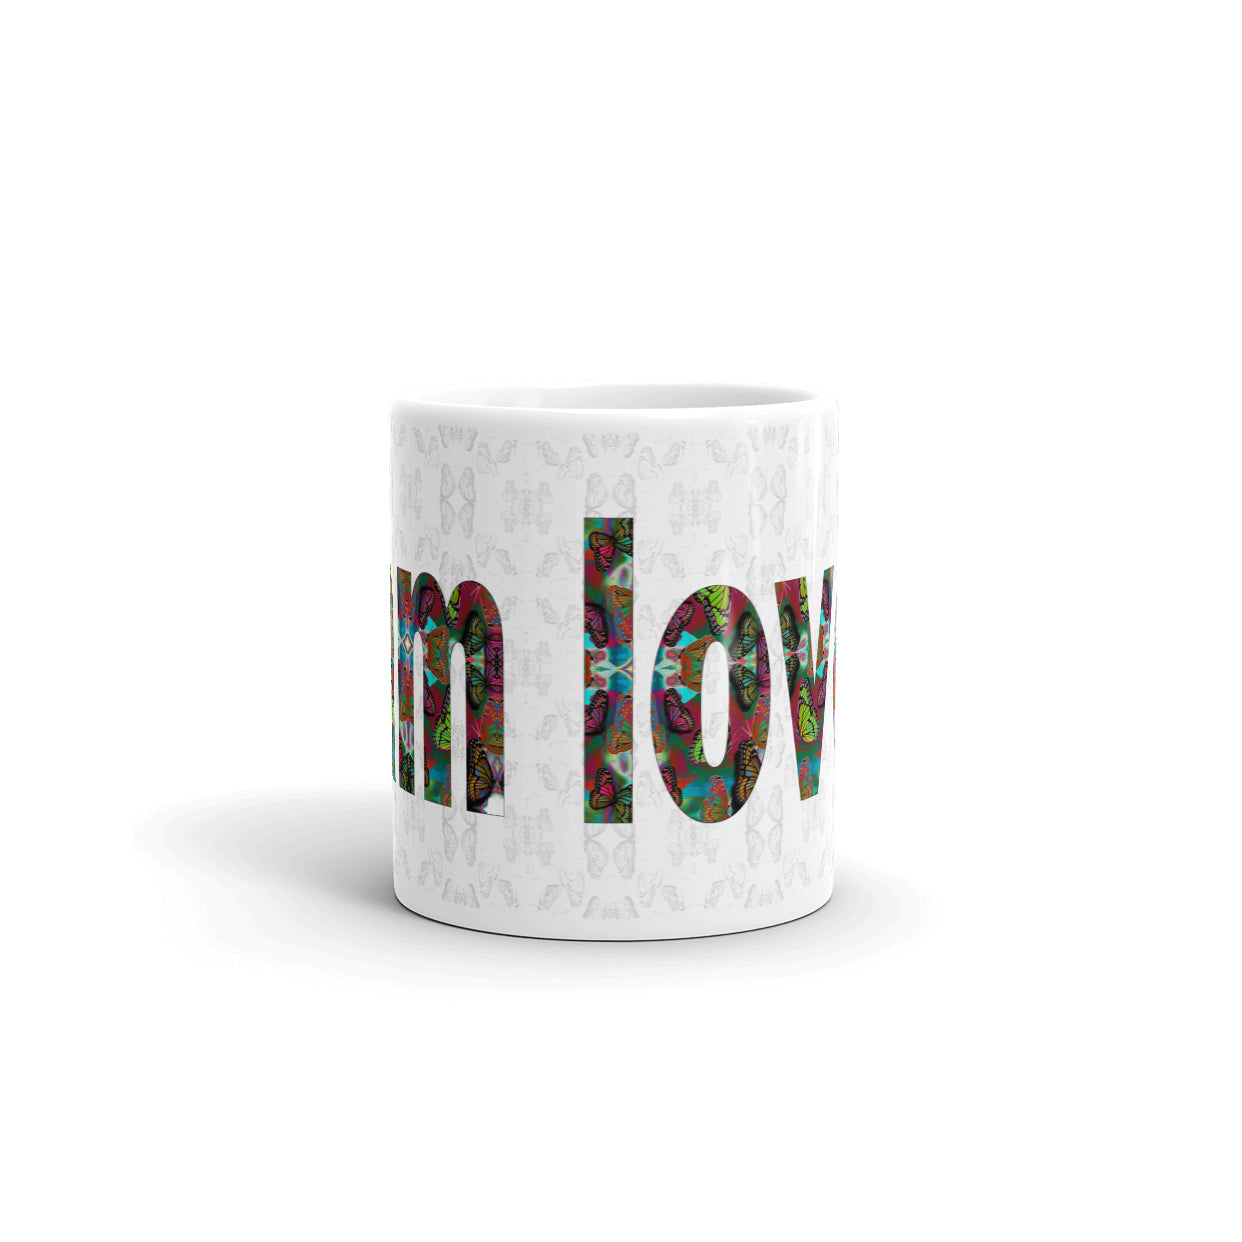 I am Loved ~ LOVE ETERNAL Ceramic Coffee Mug; 11 or 15 ounce, Colorful Butterflies, Printed Words, Word Art, Motivation Mug